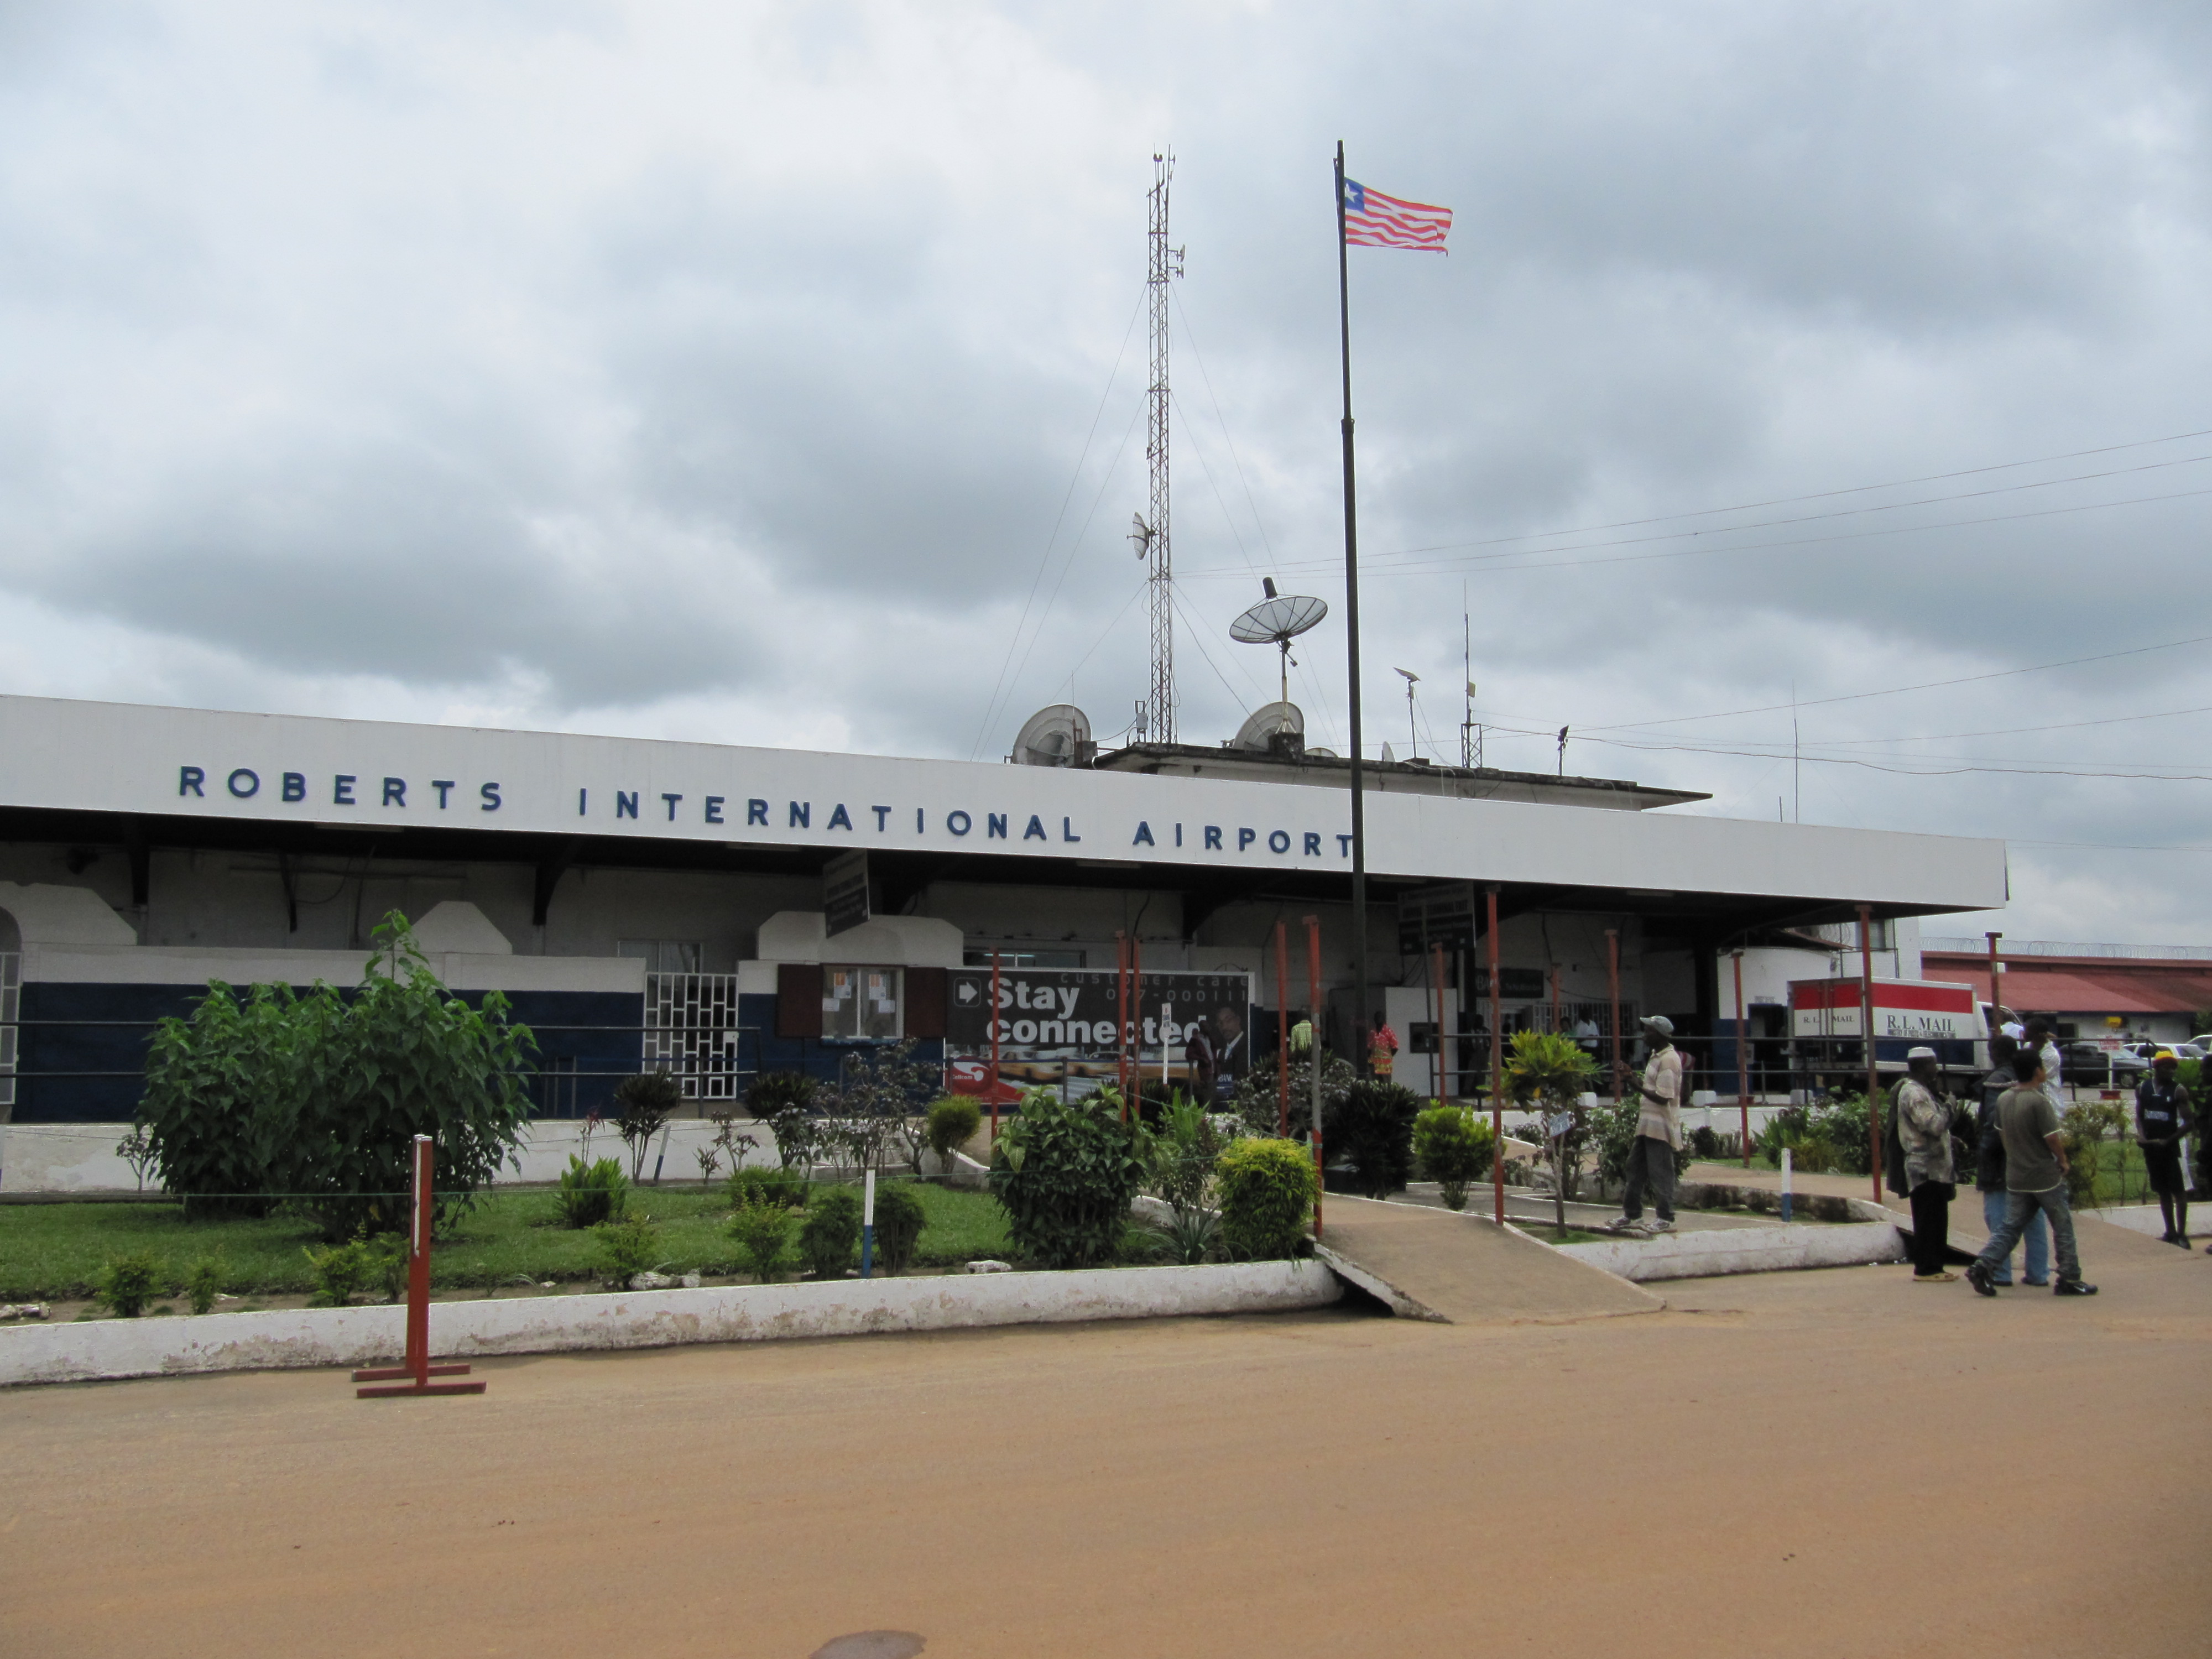 File:Roberts International Airport.JPG - Wikipedia